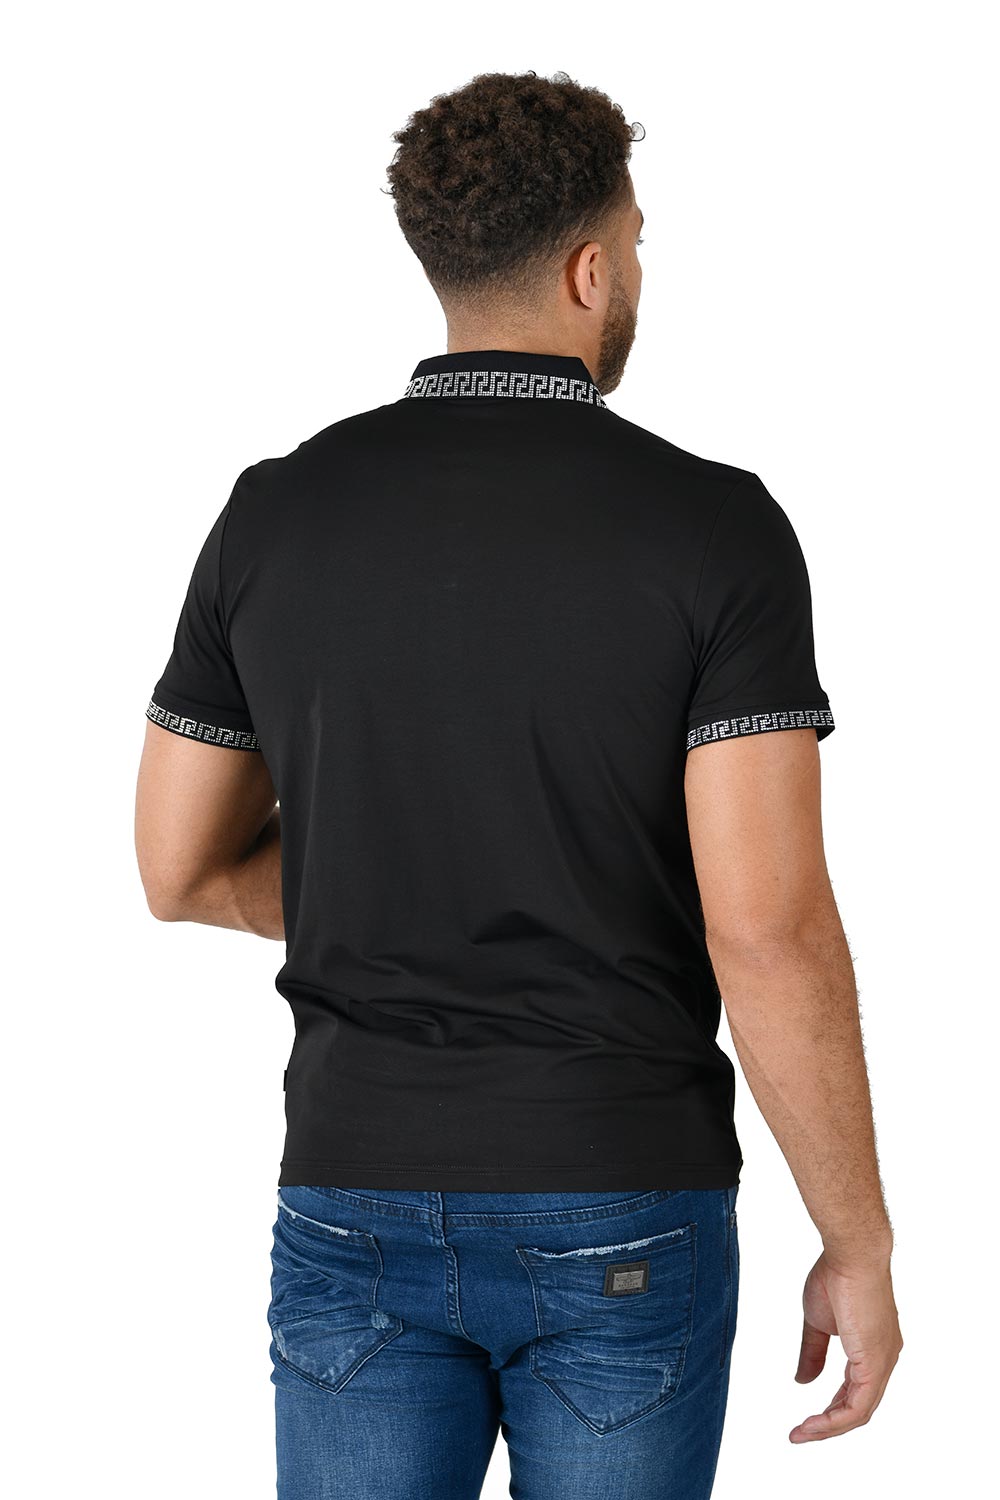 BARABAS men's rhinestone Greek key pattern polo shirt PS118 Black silver